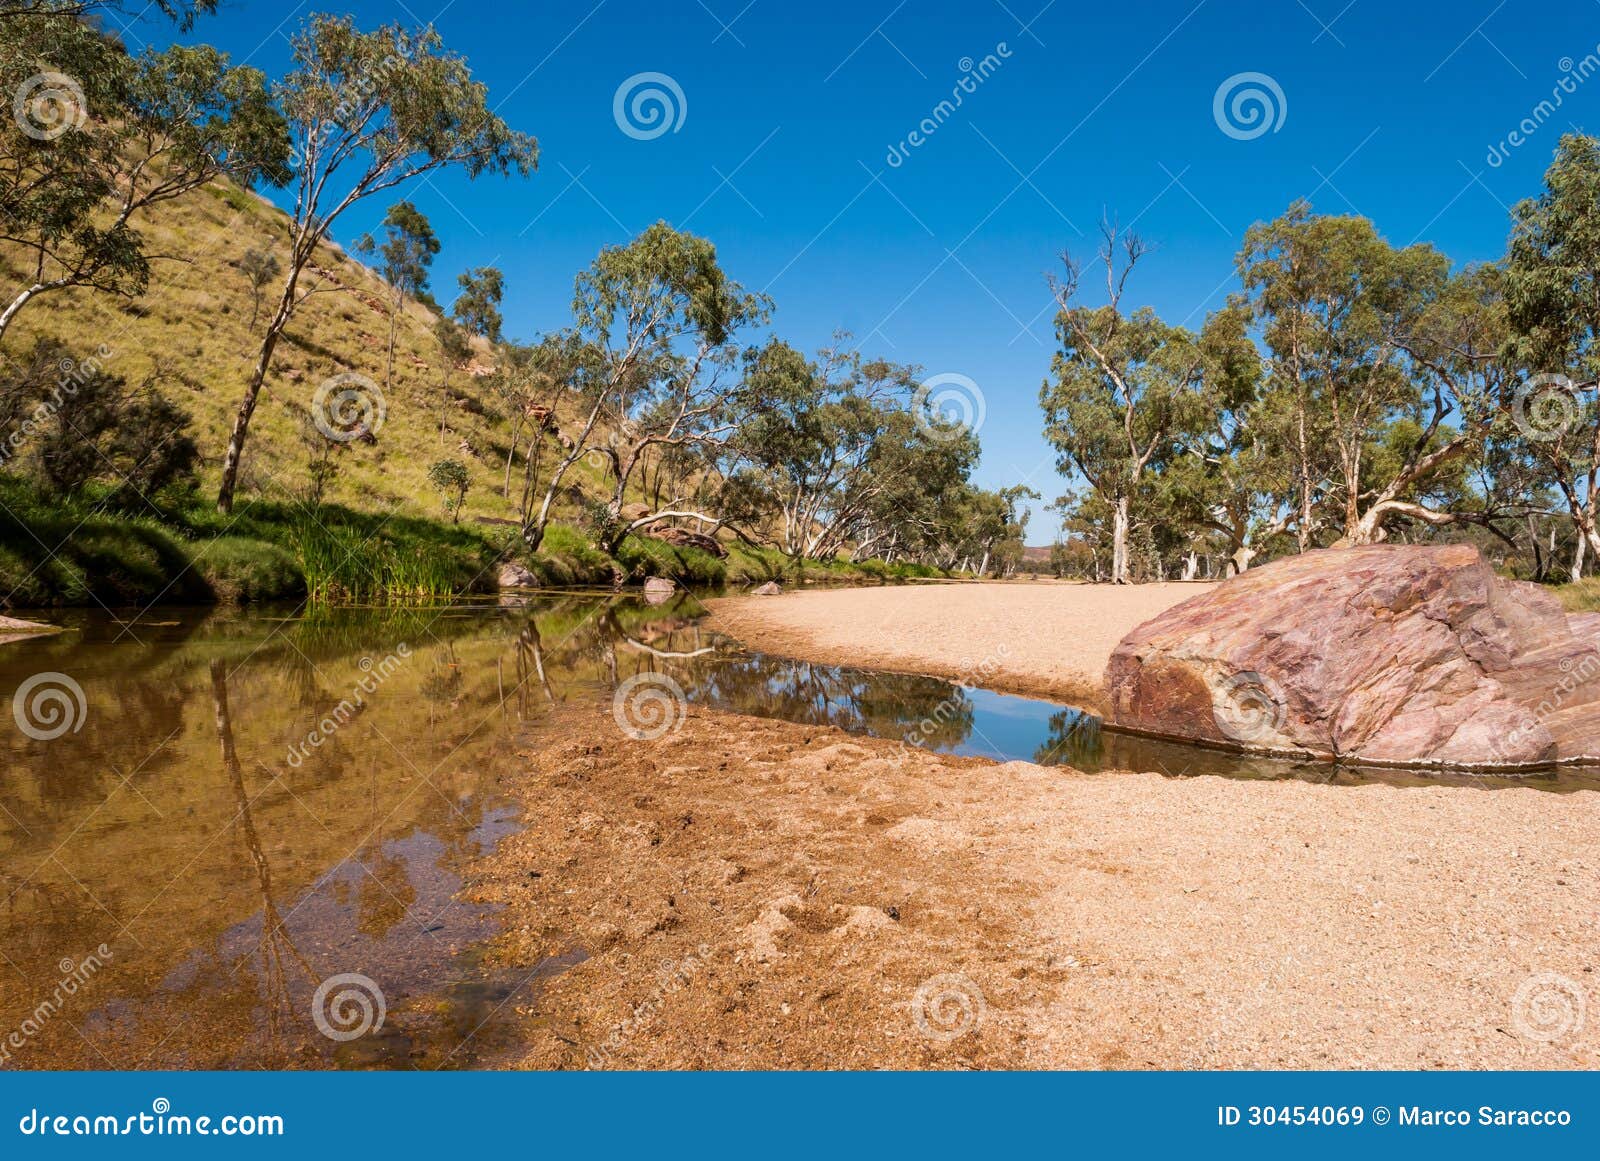 simpsons gap, macdonnell ranges, australia